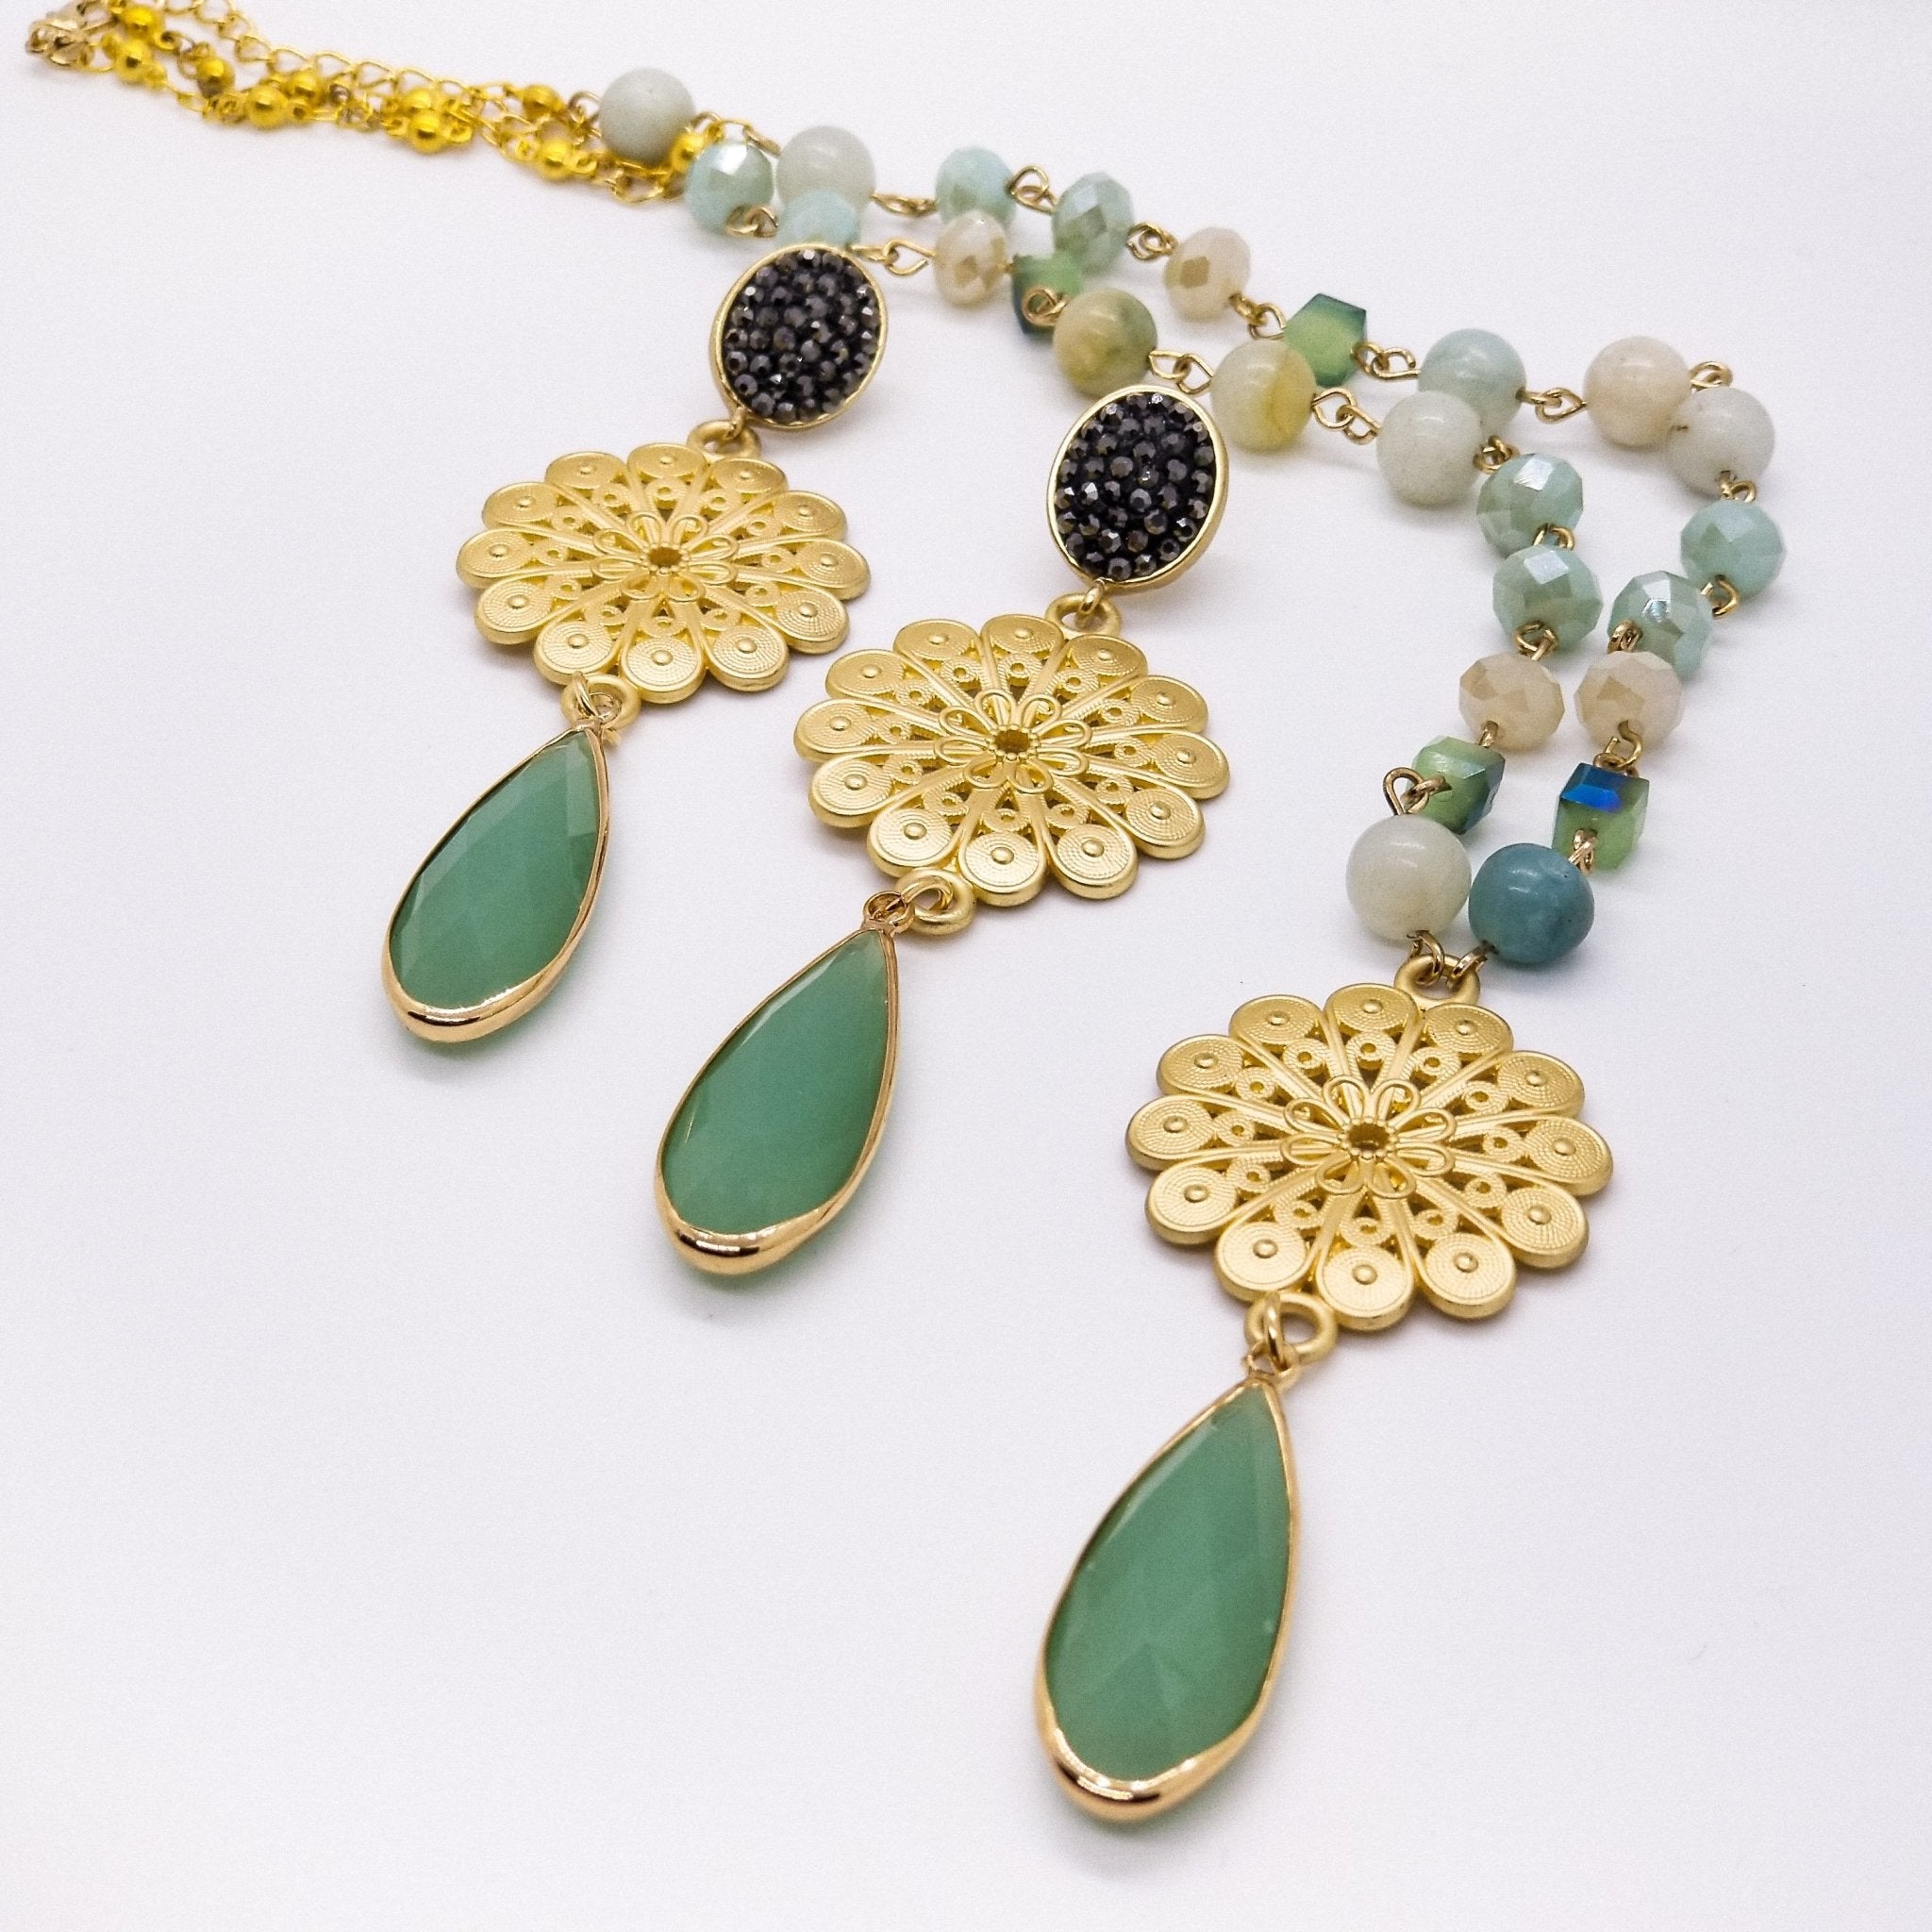 Del Ray - Revital Exotic Jewelry & Apparel